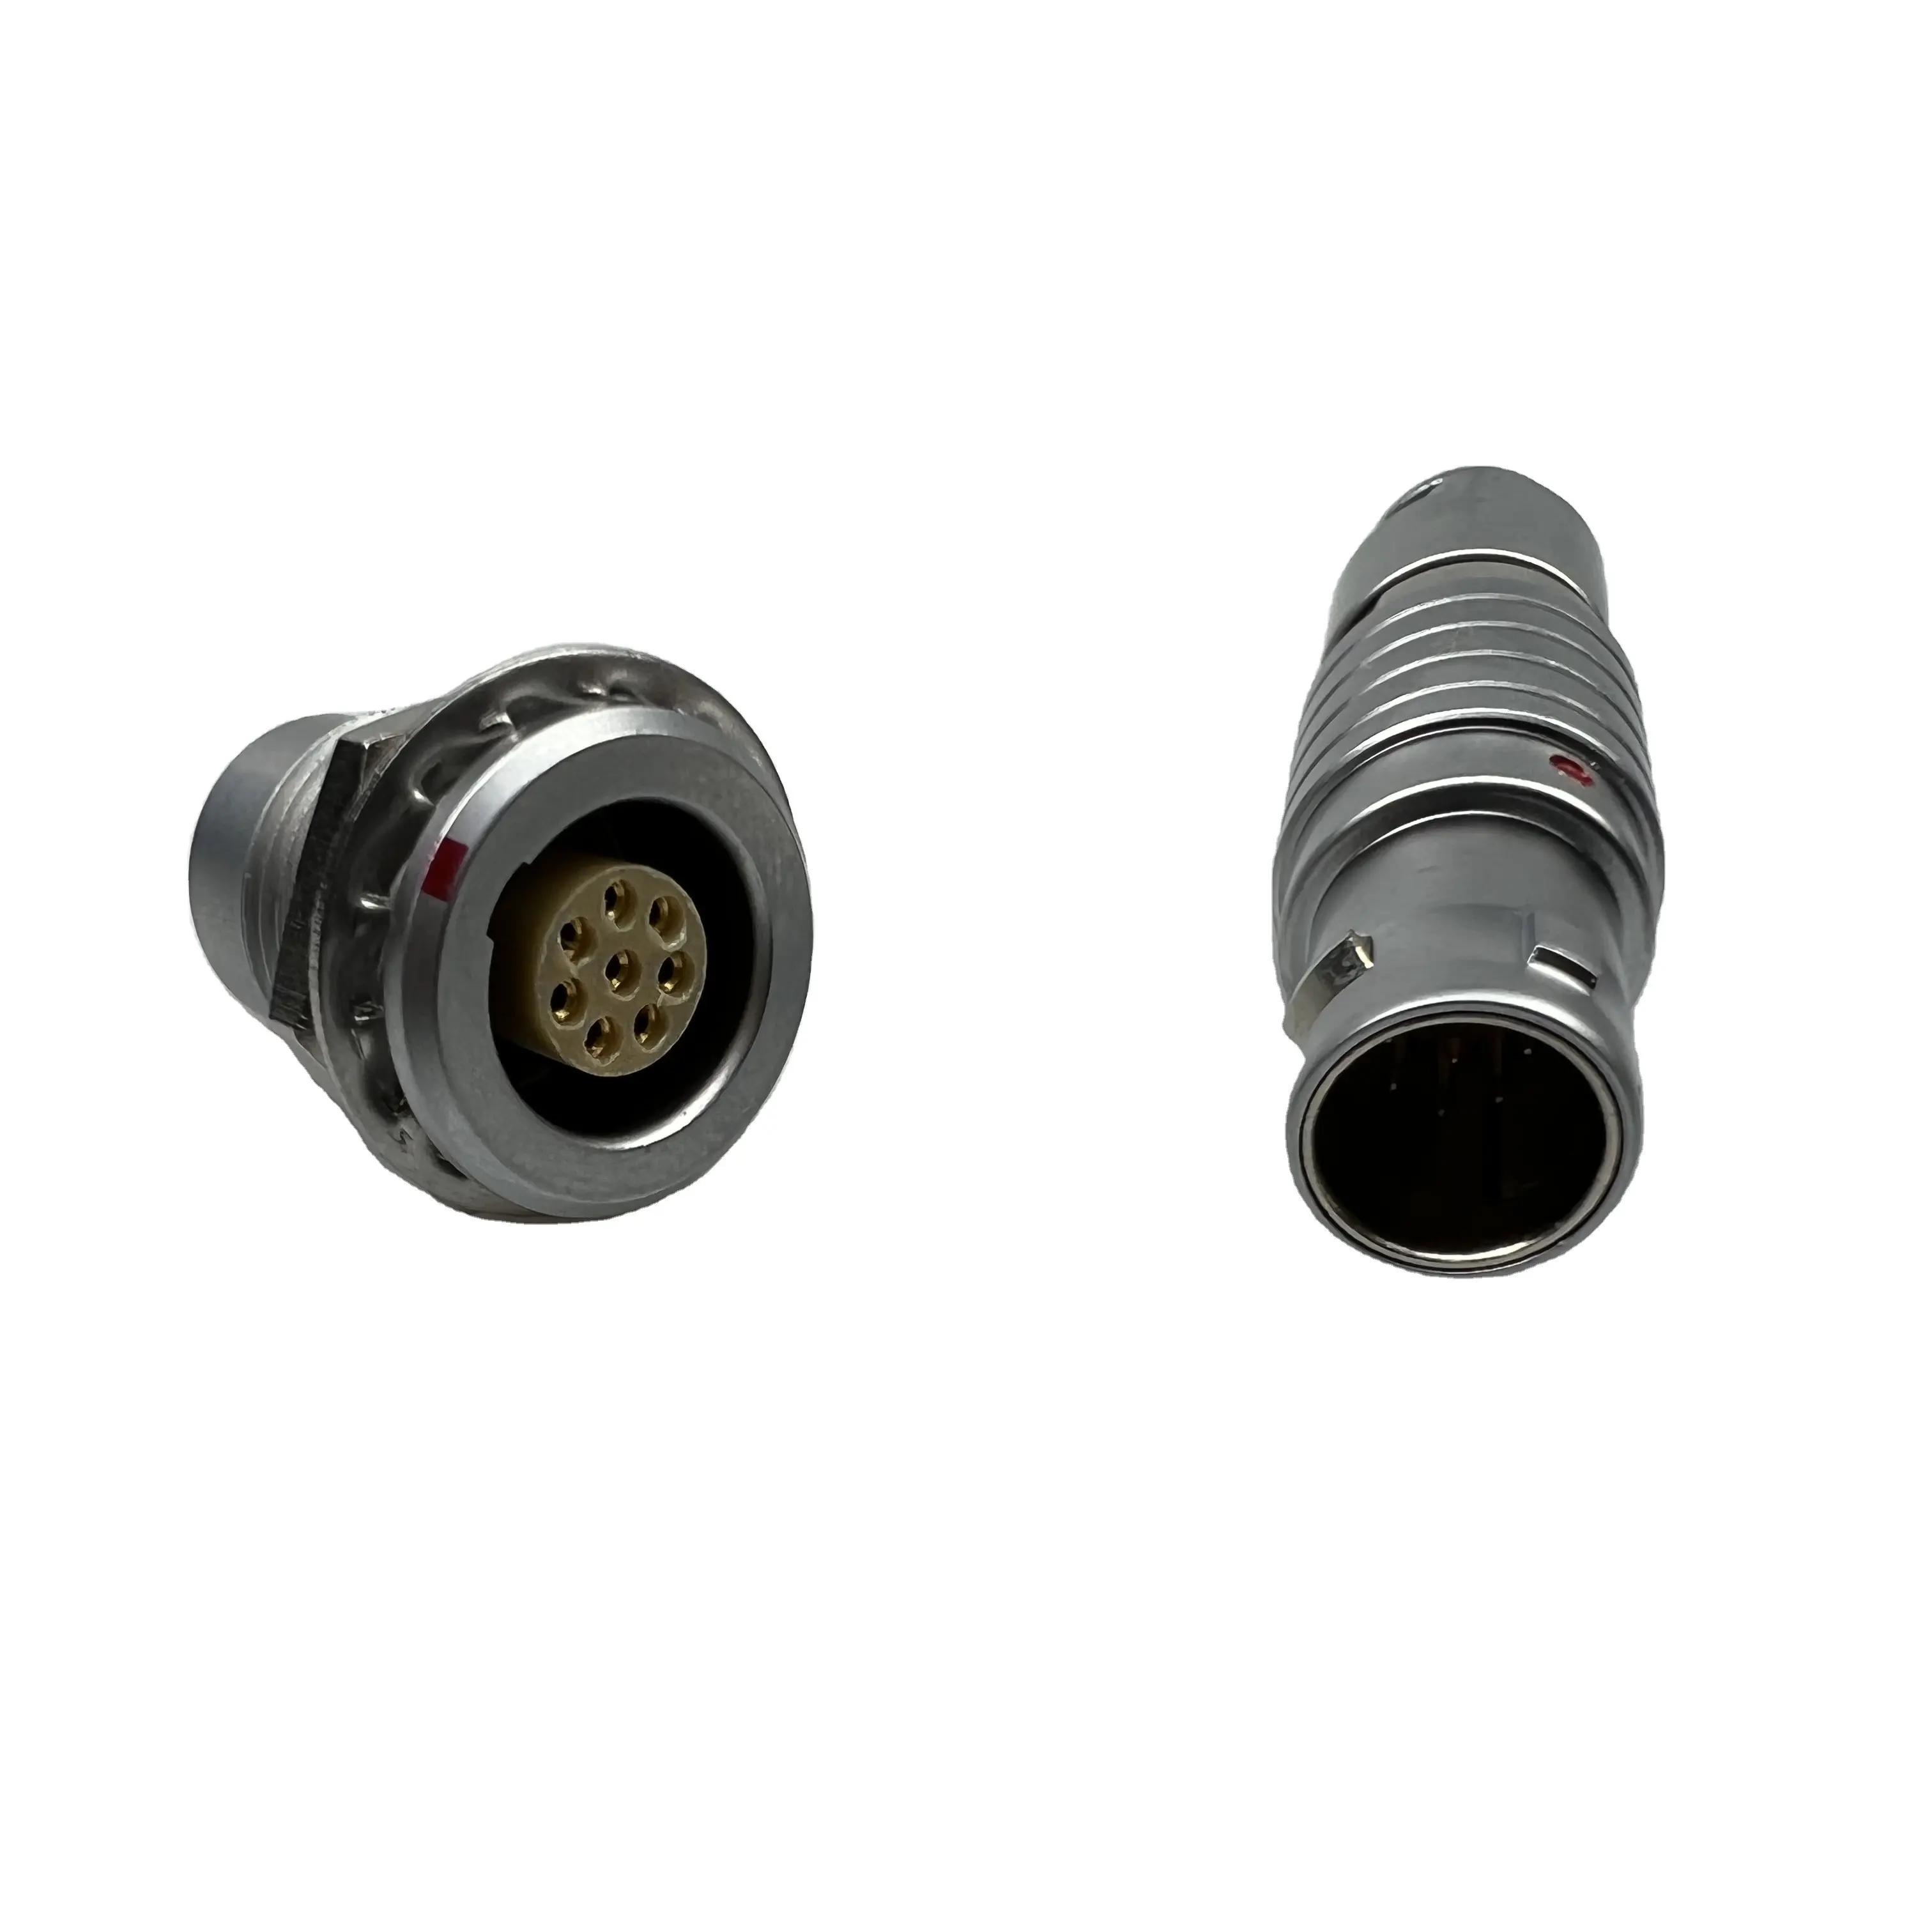 2 / 3 / 4 / 5 / 6 / 7 / 8 / 10 / 12 / 14 pin socket plug1b series metal round 360 degree EMC low-cost push-pull connector